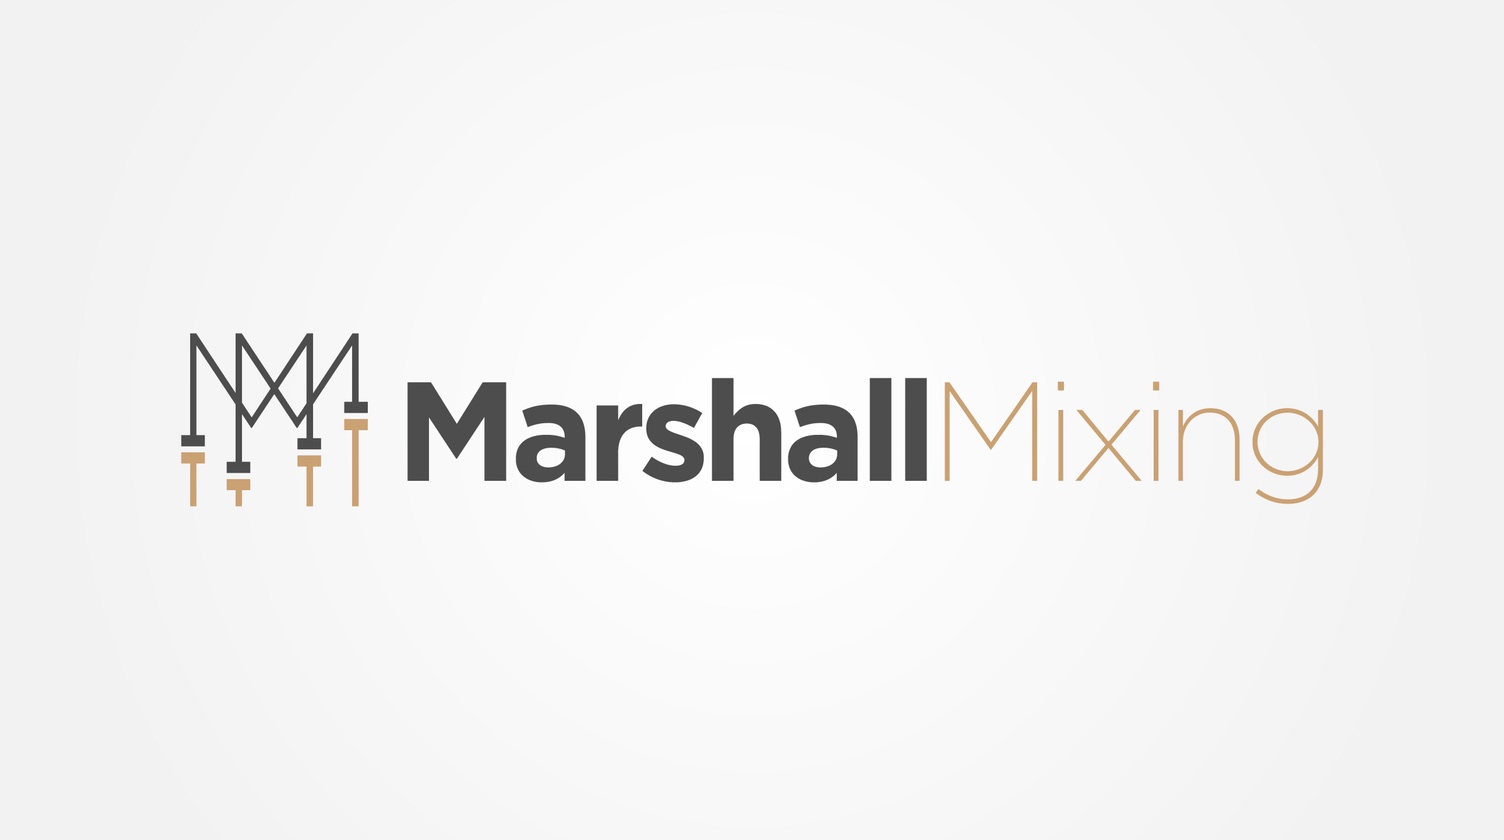 Marshall Mixing